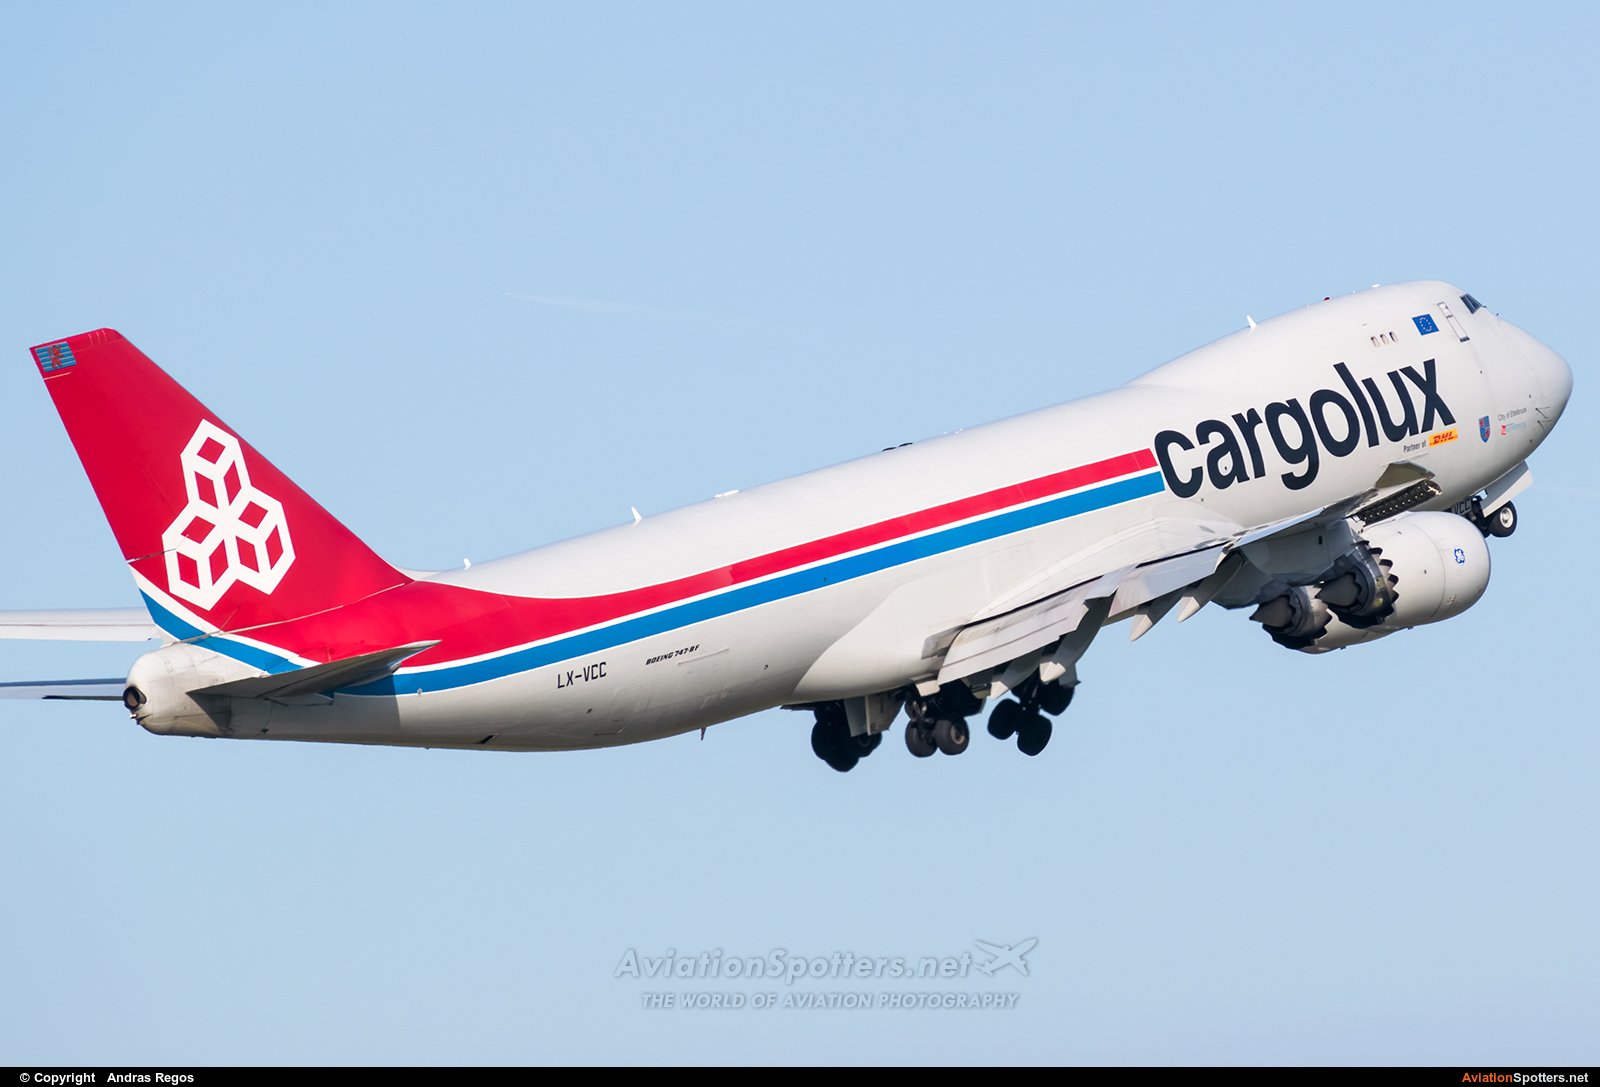 Cargolux  -  747-8F  (LX-VCC) By Andras Regos (regos)